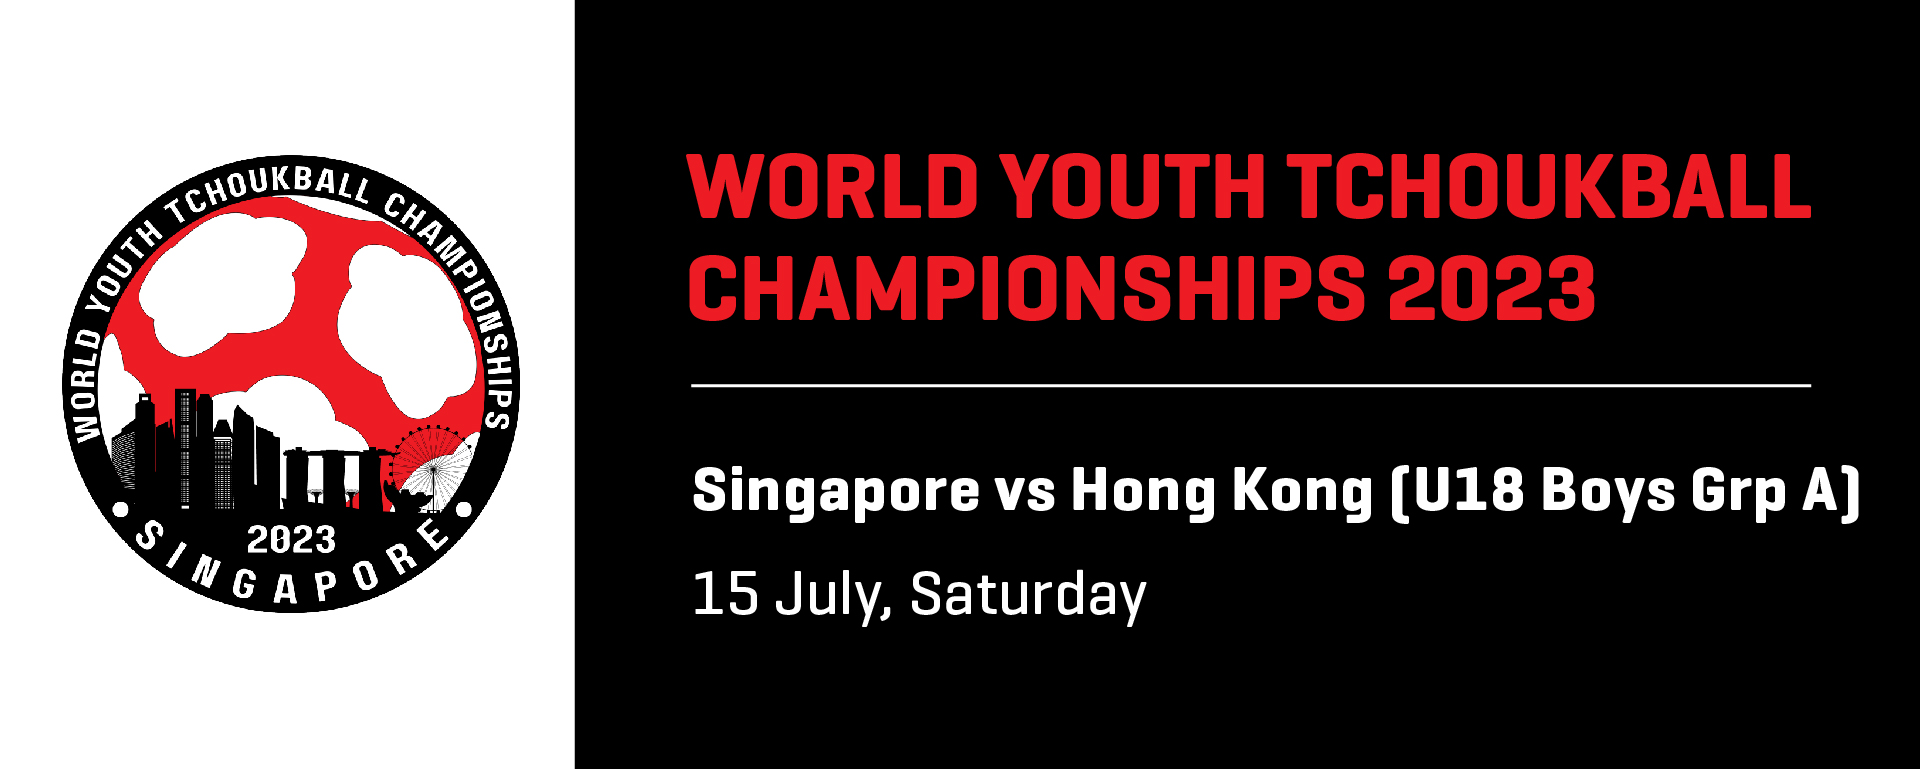 World Youth Tchoukball Championships 2023 | U18 Boys Singapore vs Hong Kong (Grp A)